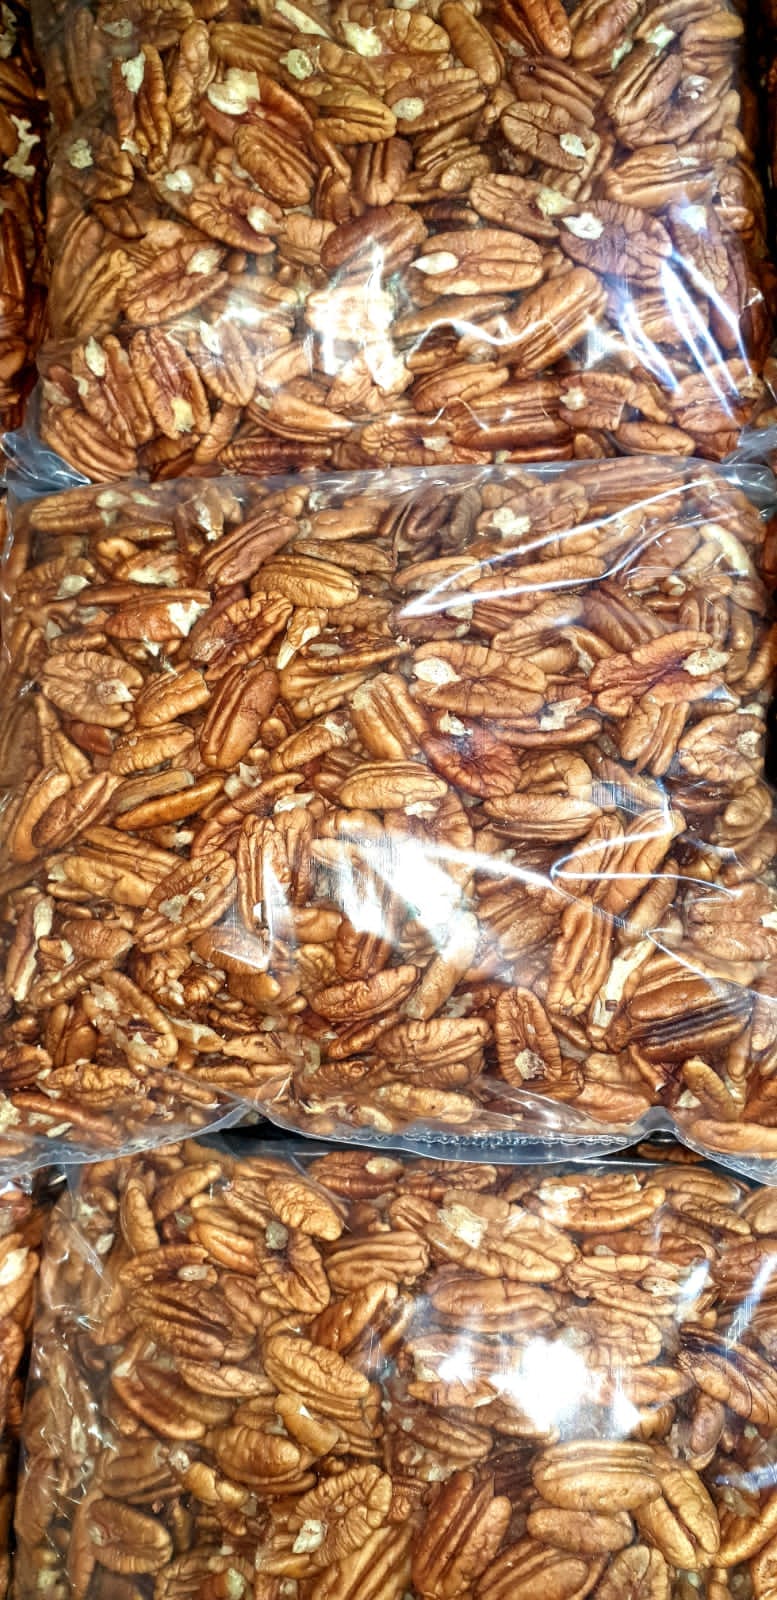 Fresh Pecan Nuts